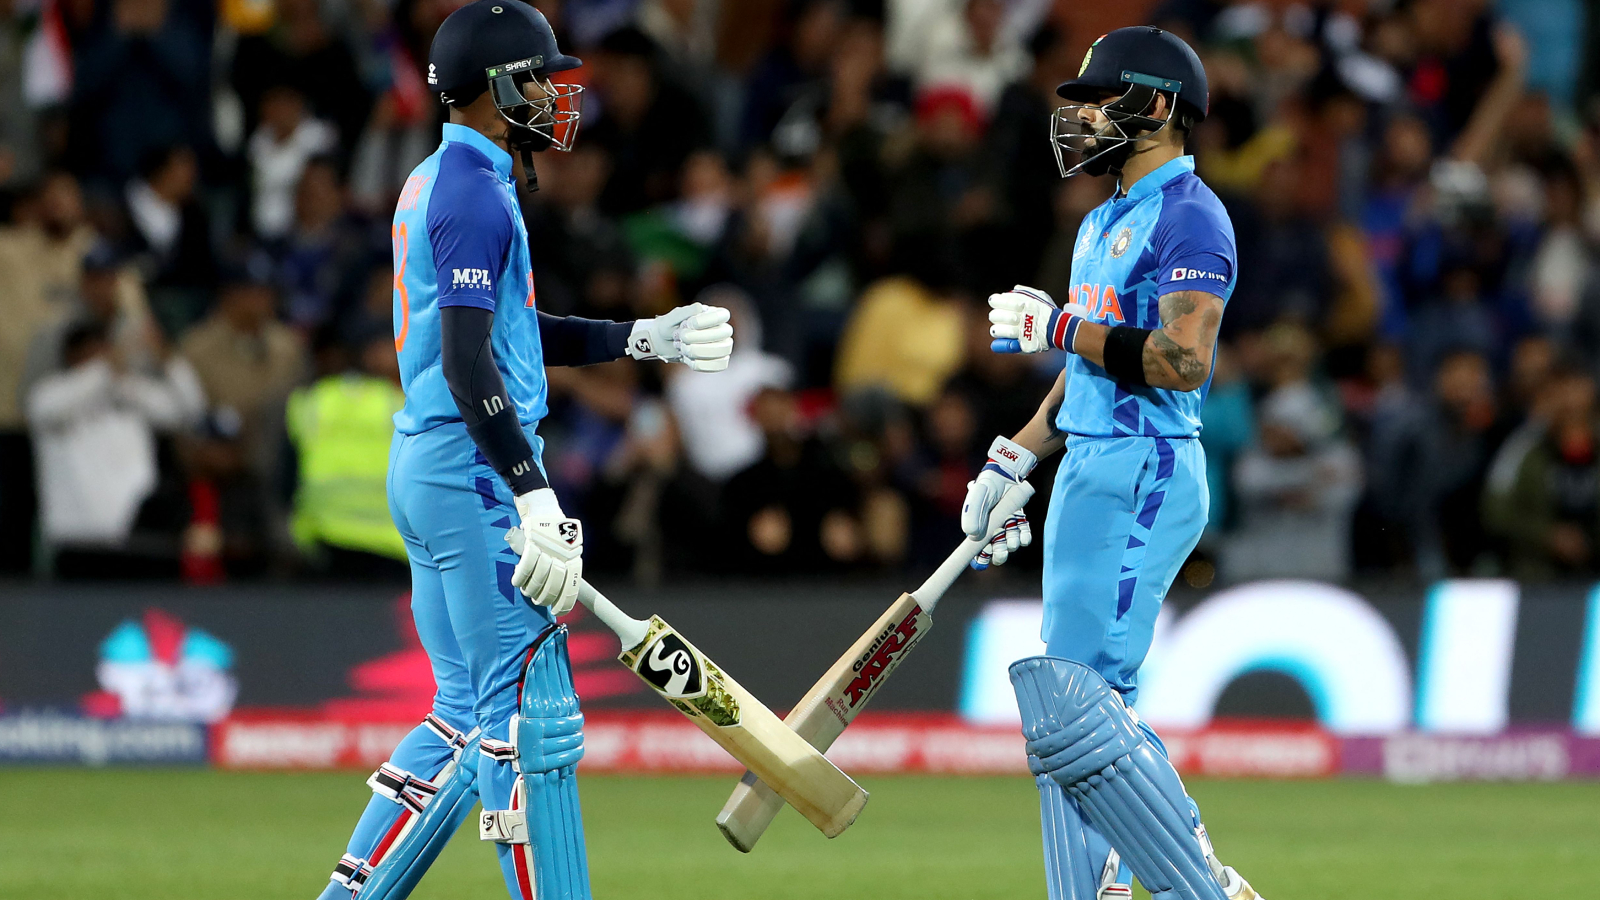 Hardik Pandya and Virat Kohli of India during a T20 Cricket World Cup 2022 match against Bangladesh.